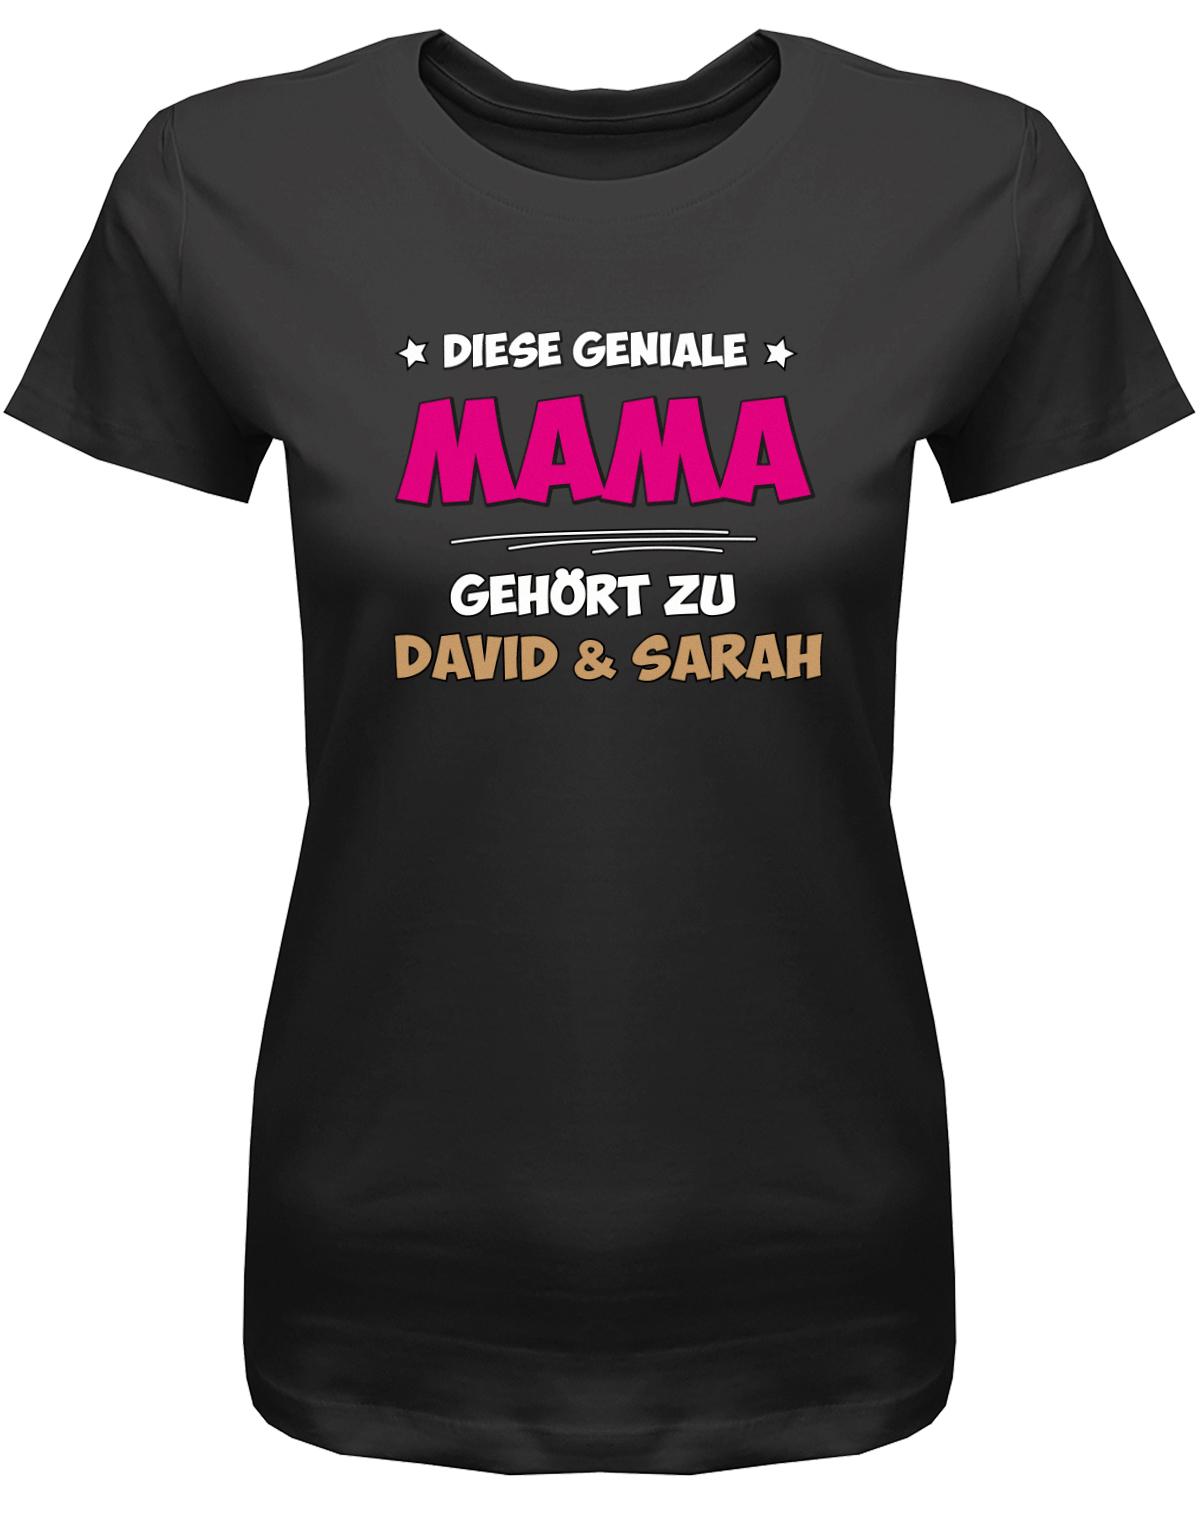 Diese-geniale-Mama-geh-rt-zu-Wunschnamen-Damen-Mama-Shirt-SChwarz